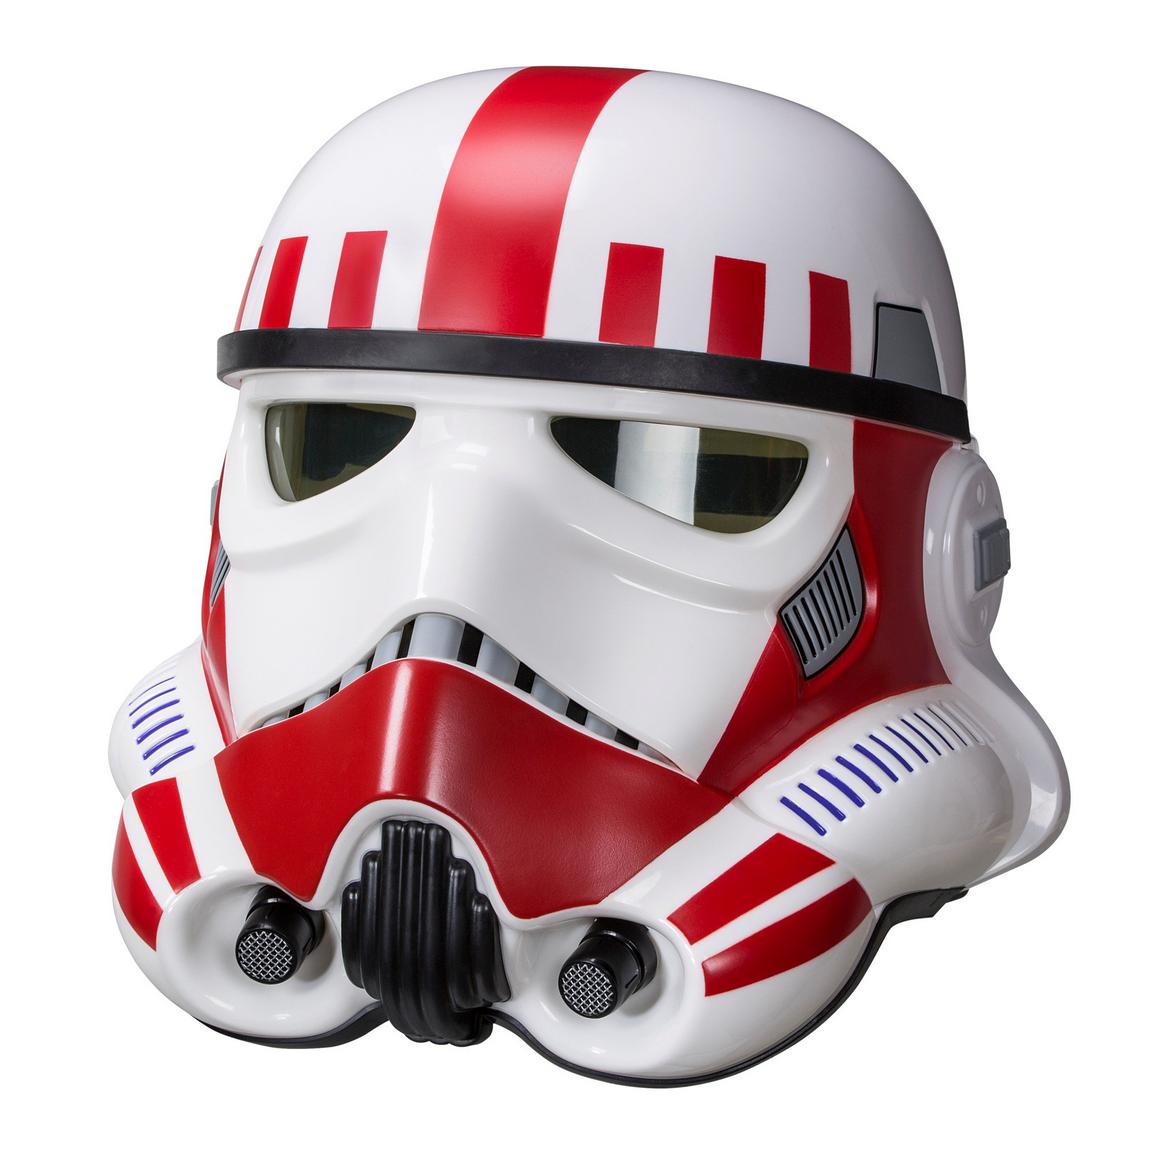 Star Wars The Black Series Star Wars: Battlefront II Imperial Shock Trooper Electronic Helmet